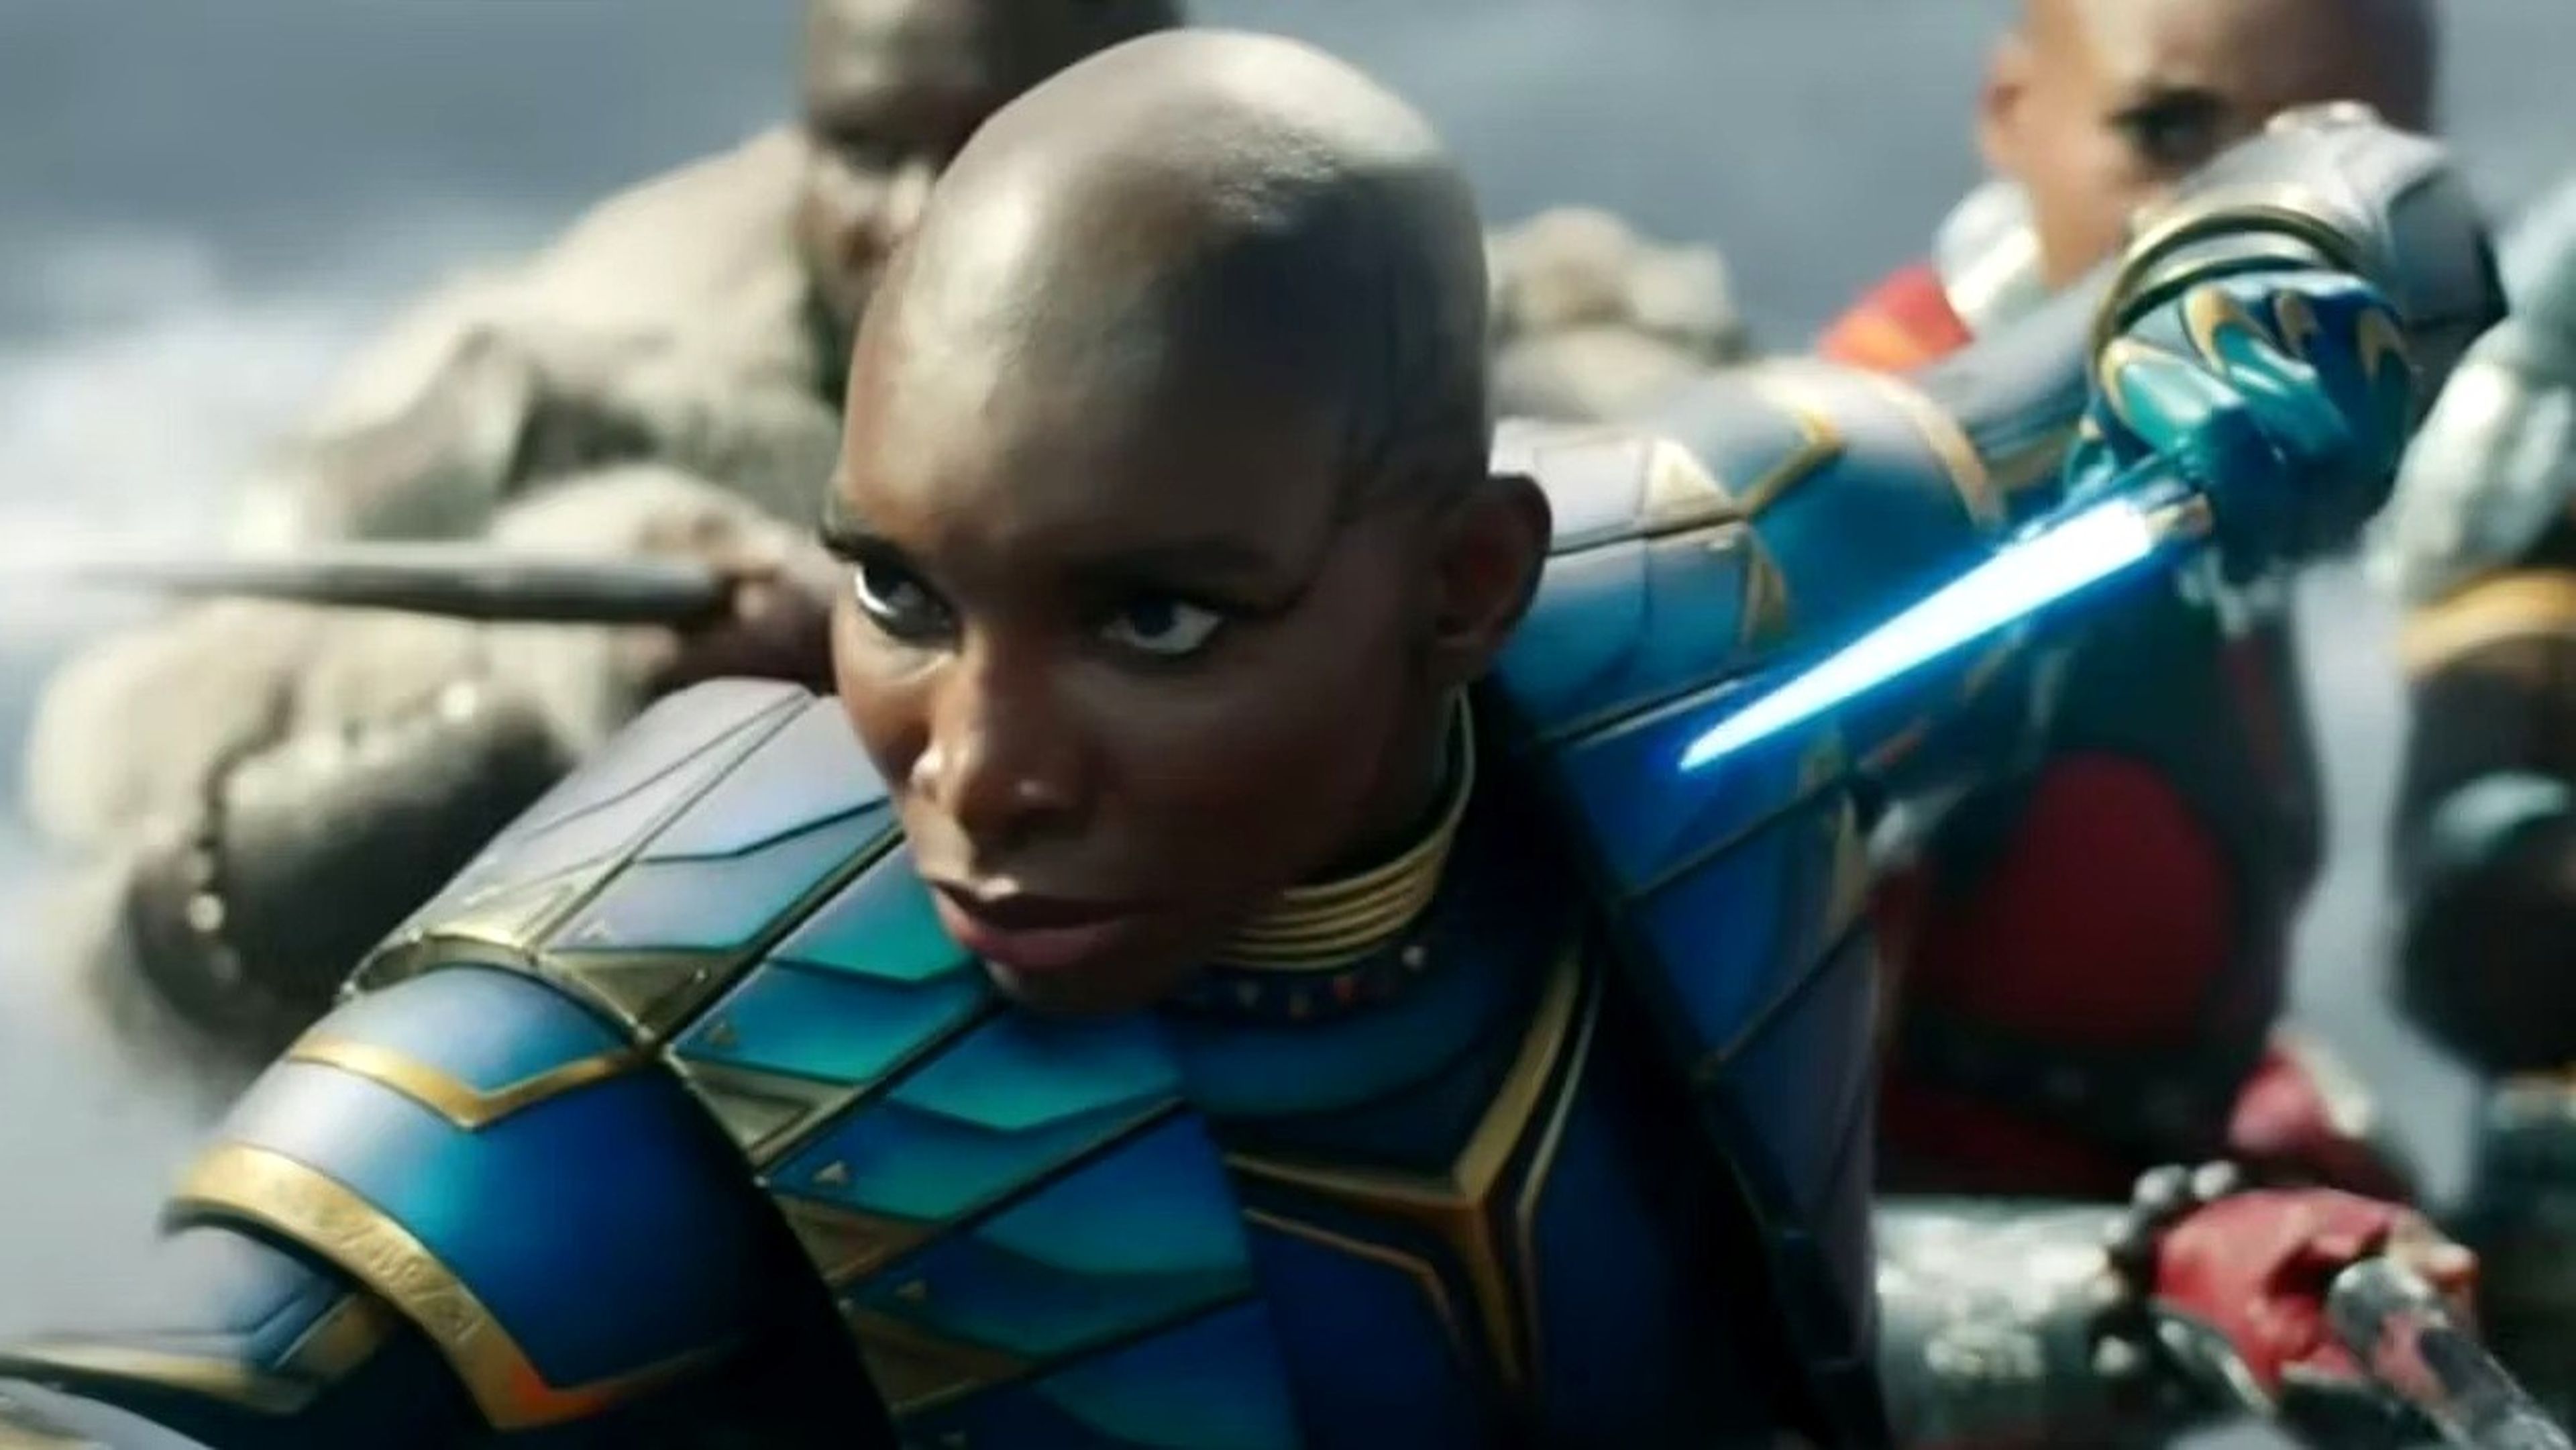 Michaela Coel Aneka Black Panther: Wakanda para siempre